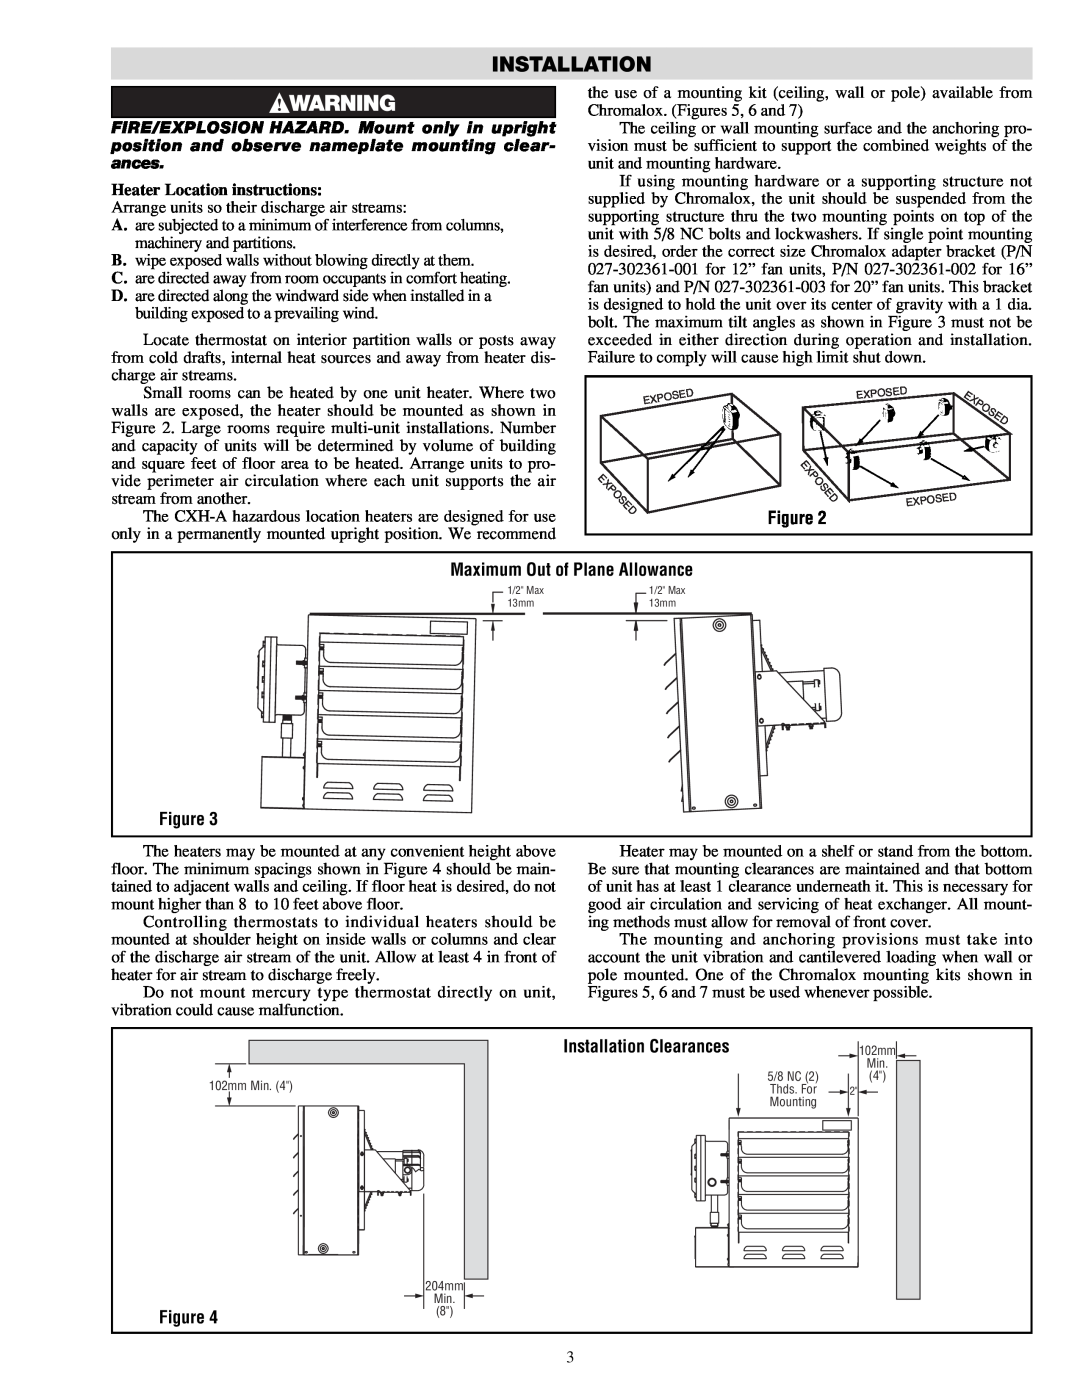 Chromalox PF490-5 installation instructions Installation, Heater Location instructions, Maximum Out of Plane Allowance 